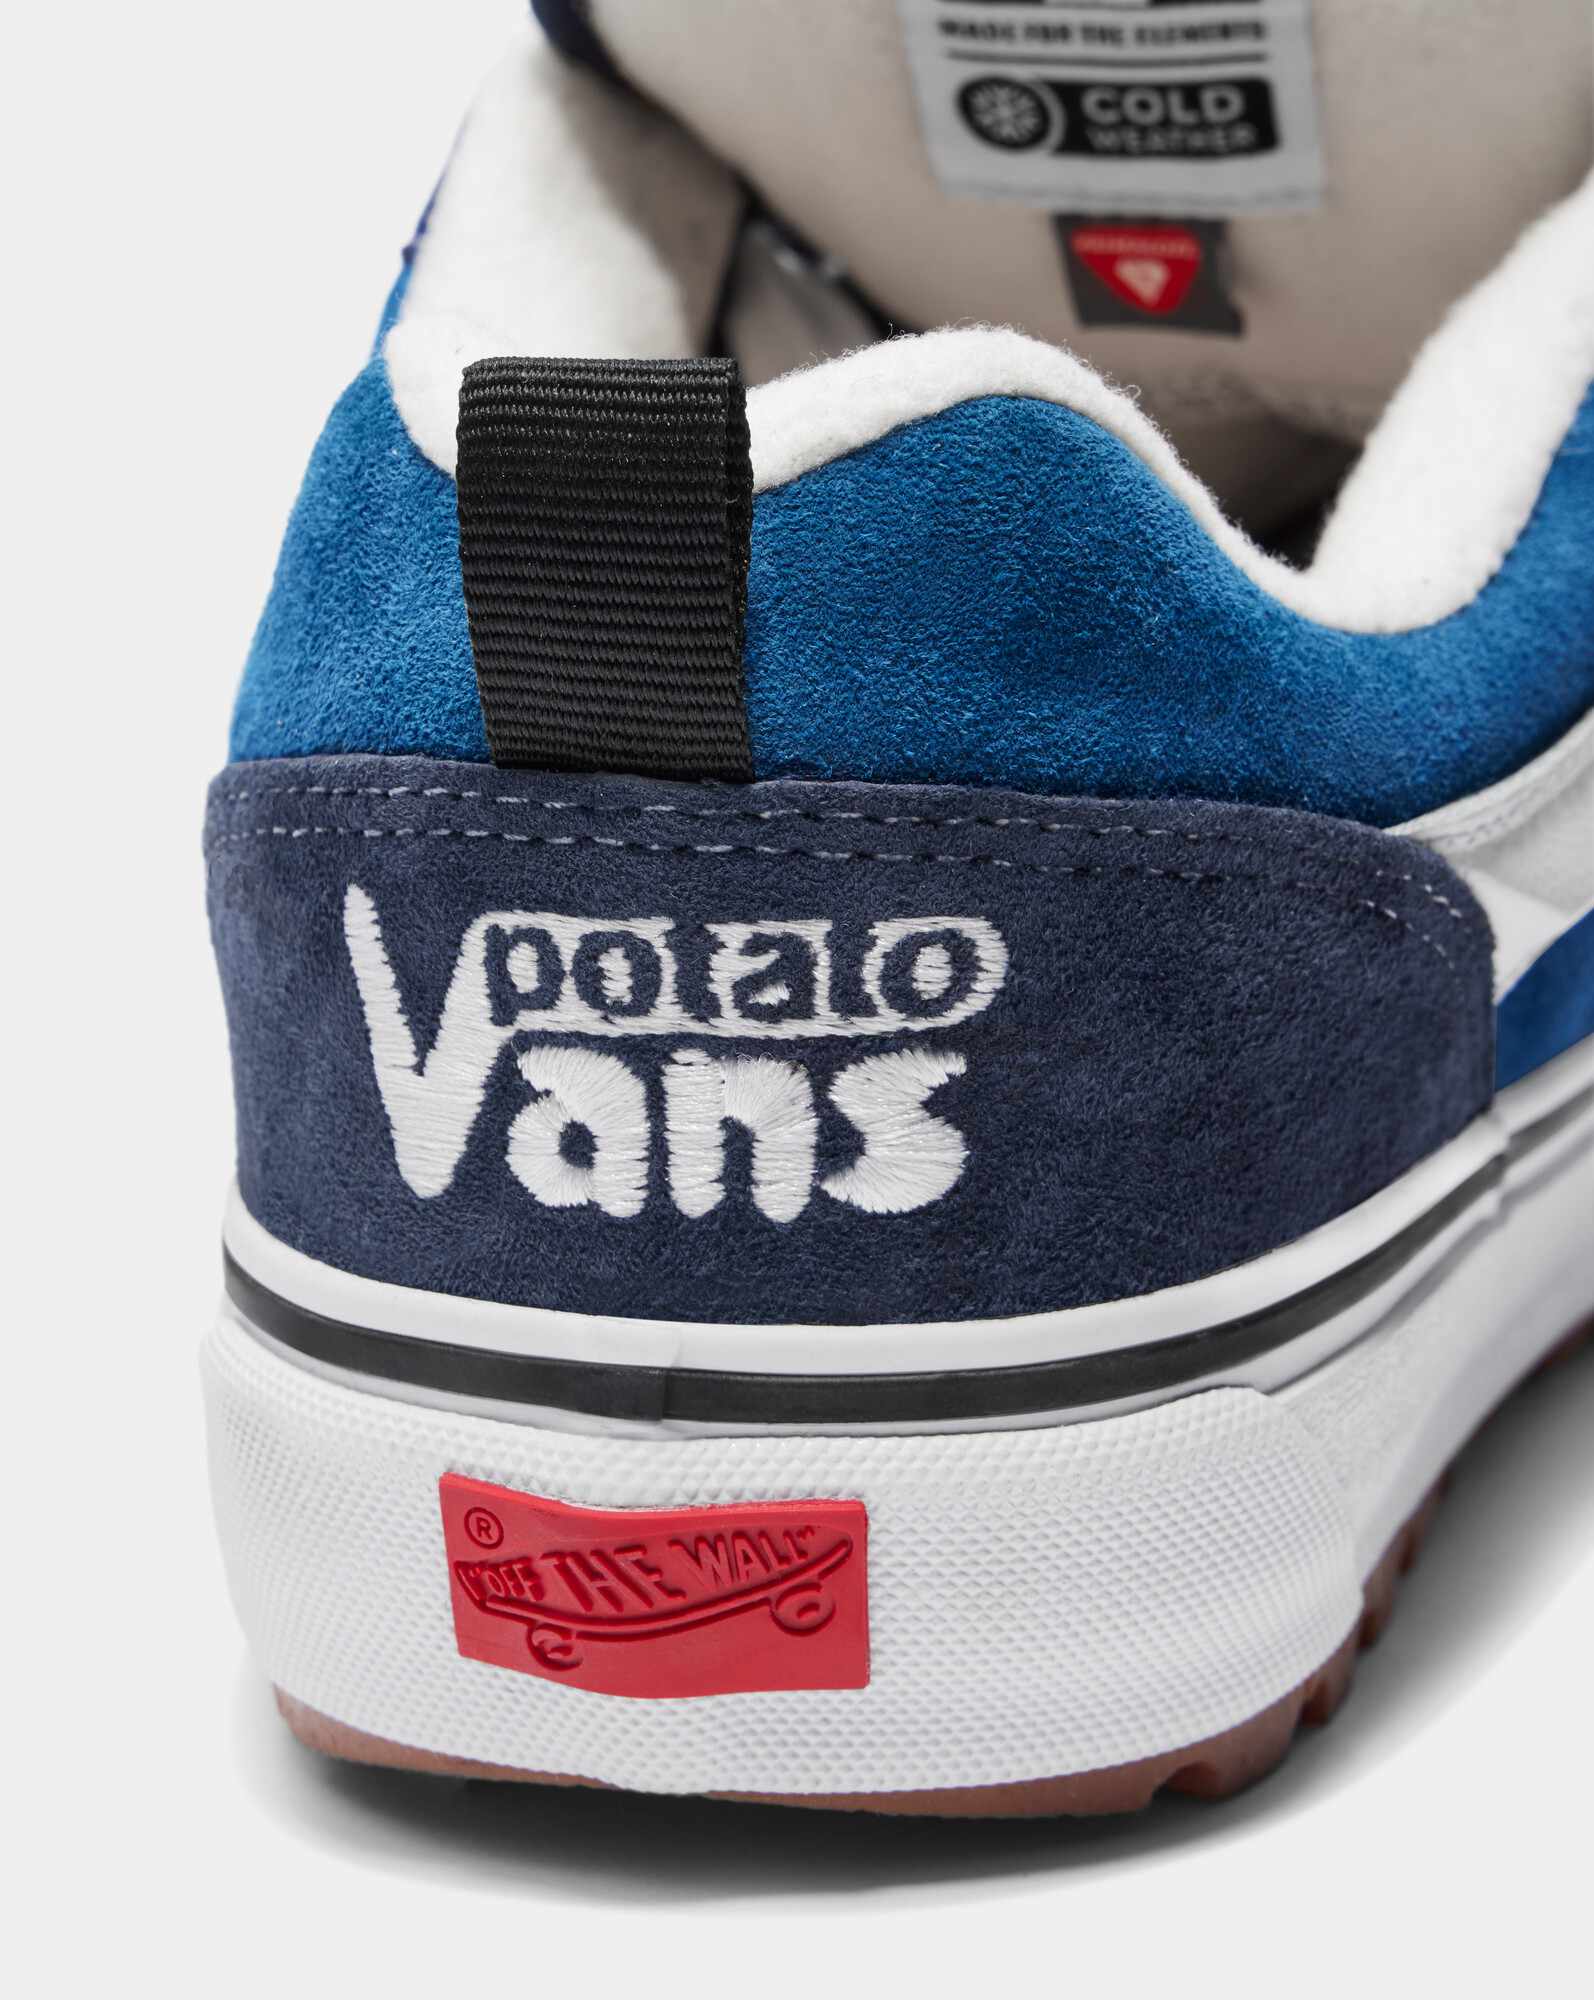 Imran Potato's Vans Knu Skool sneaker collab in blue and black